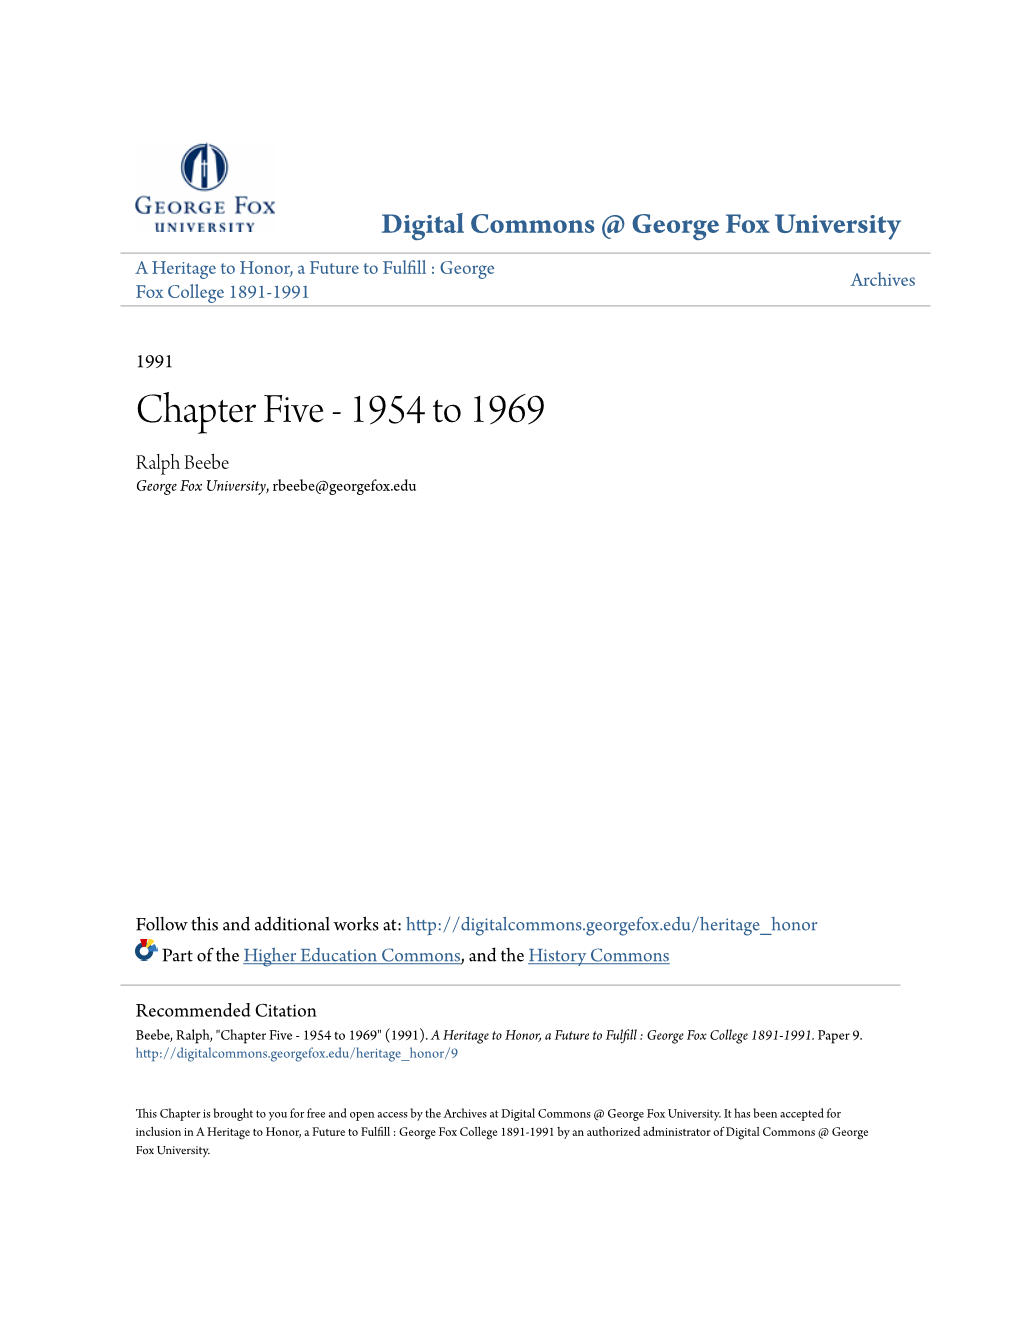 Chapter Five - 1954 to 1969 Ralph Beebe George Fox University, Rbeebe@Georgefox.Edu